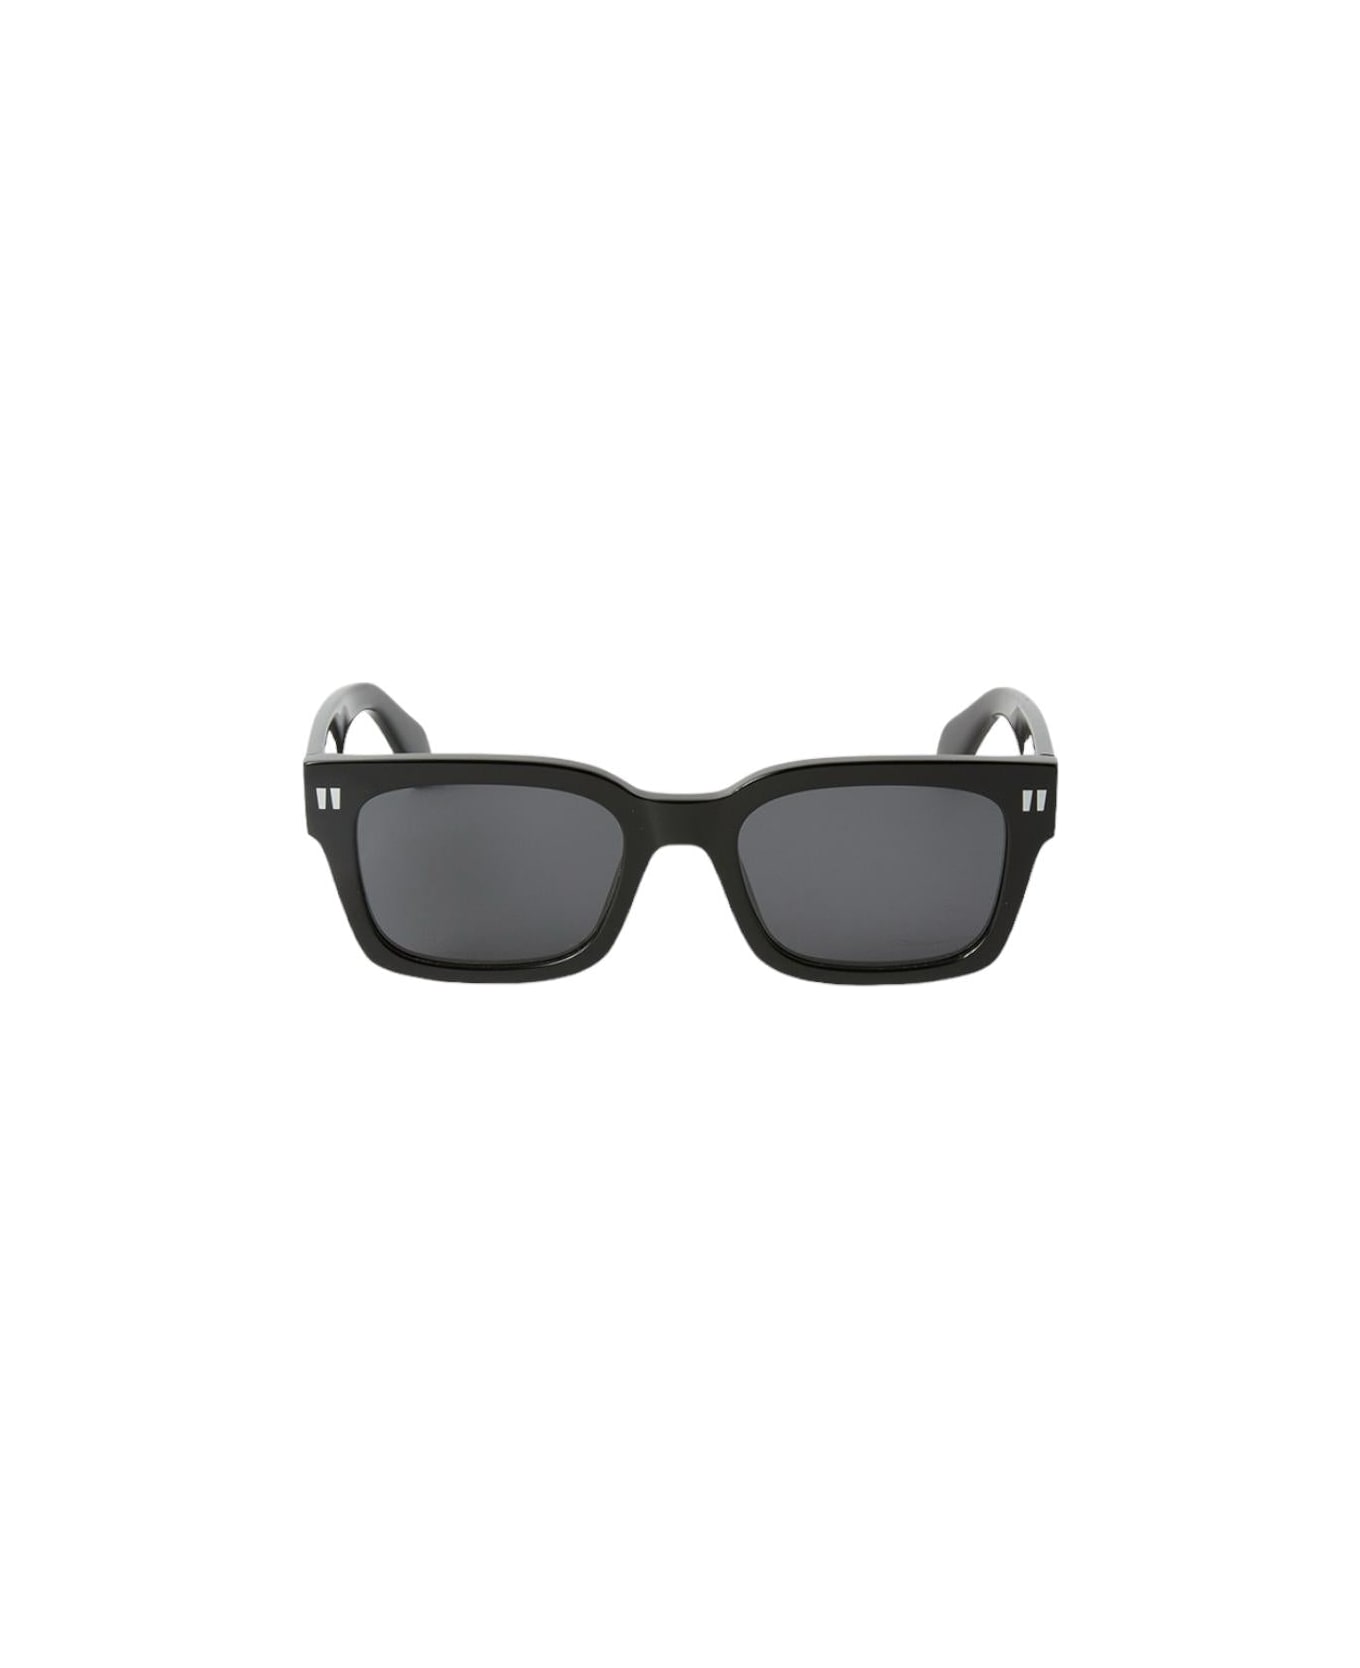 Off-White Midland - Oeri108 Sunglasses サングラス